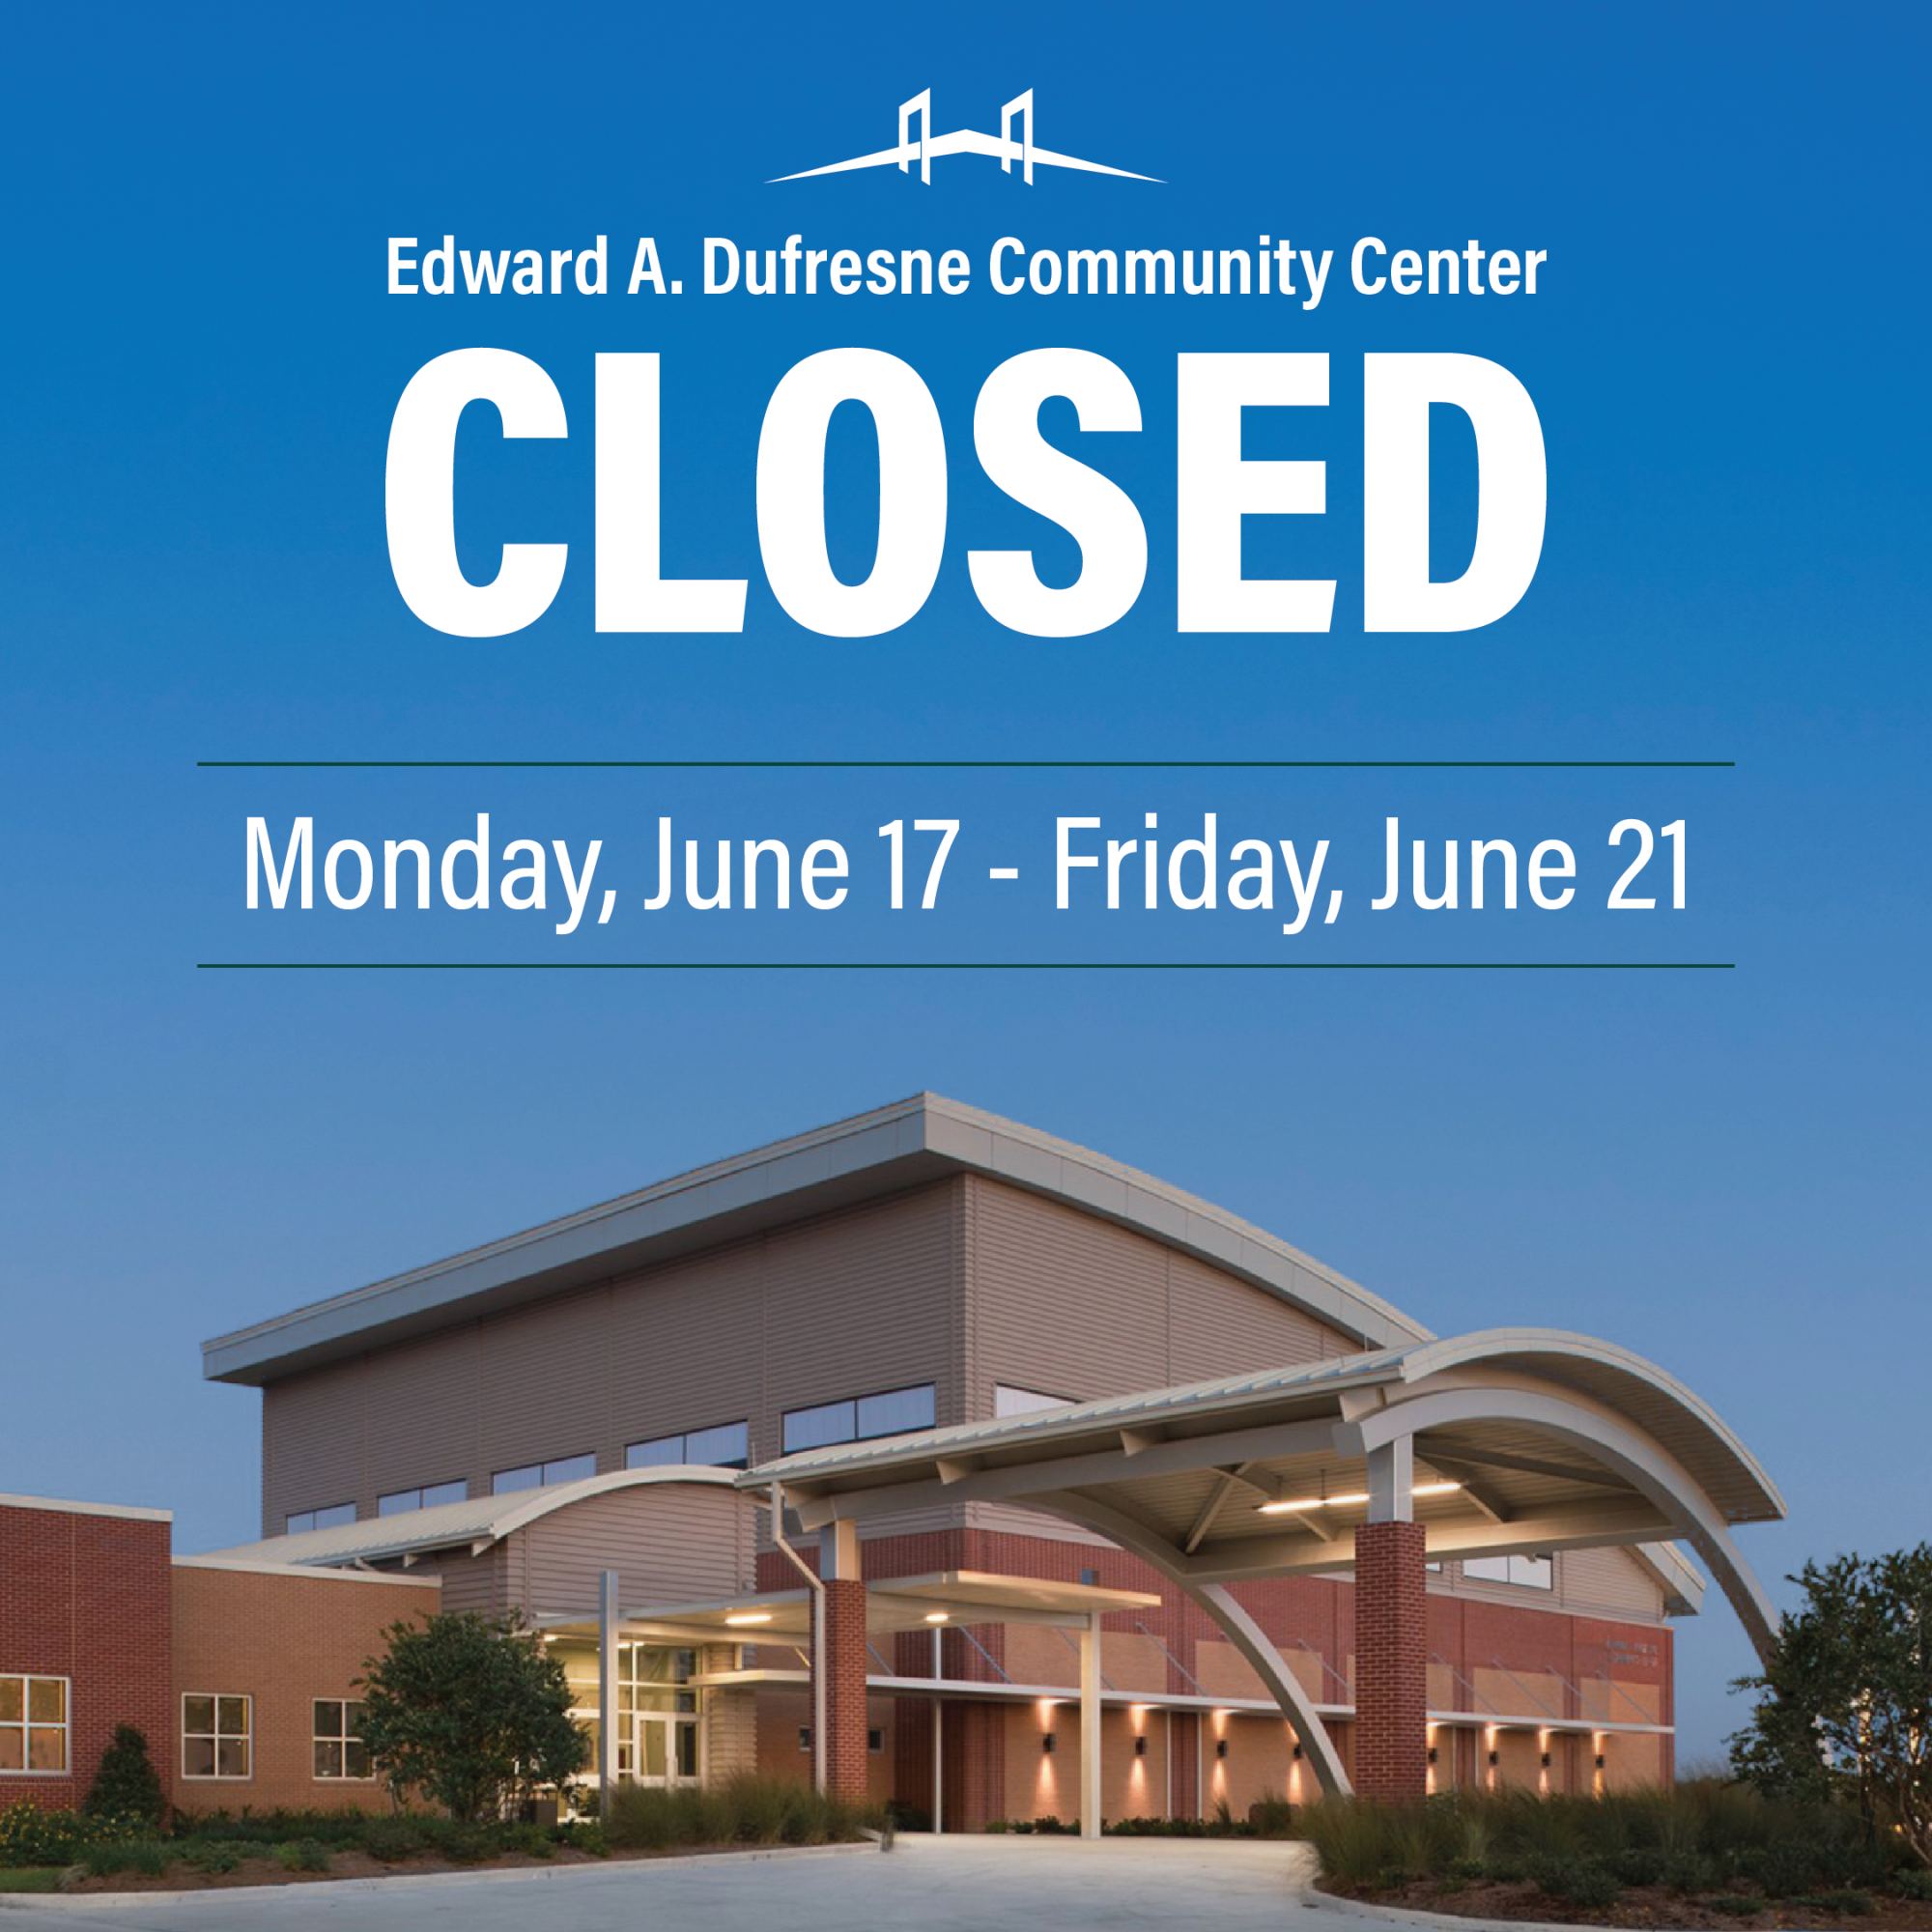 Edward A. Dufresne Community Center Closed June 17-21